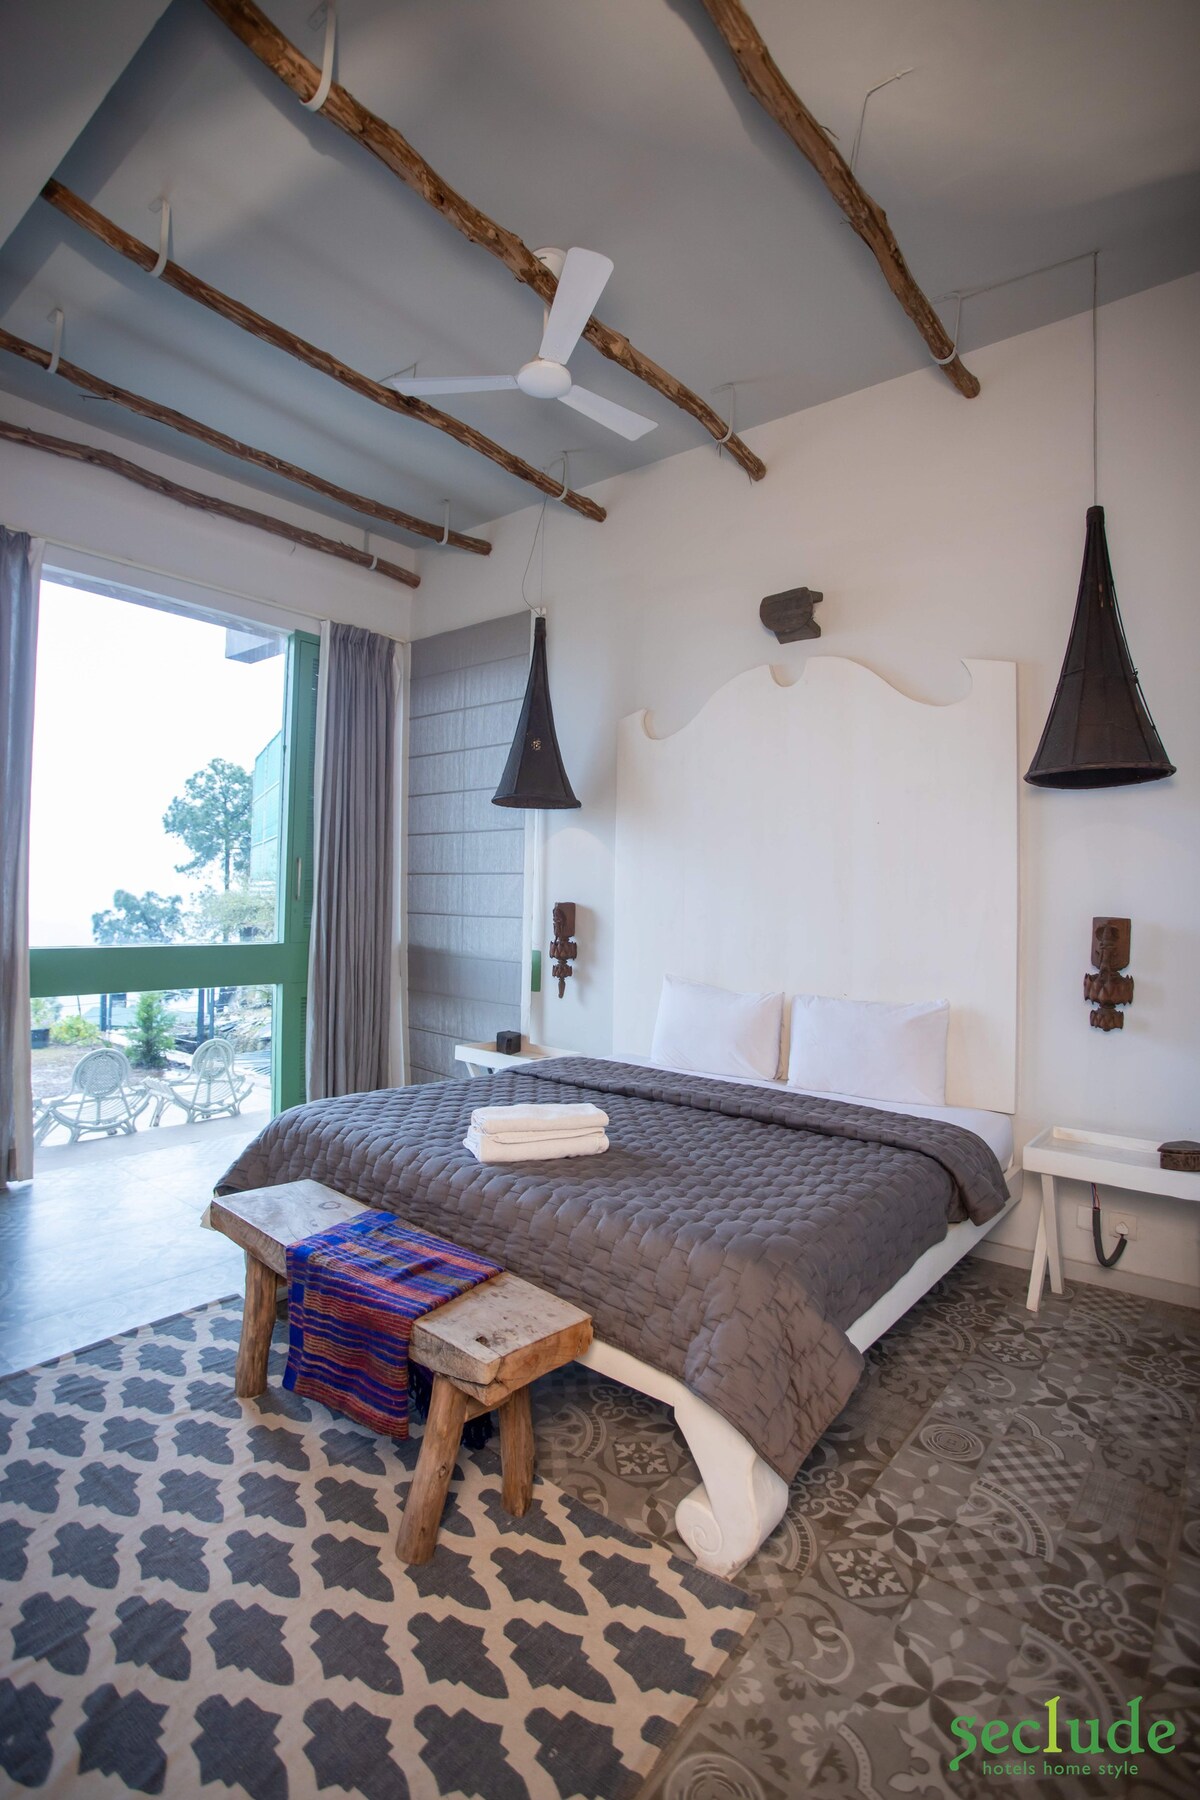 Seclude - 8 bedroom luxurious villa in Kasauli, HP